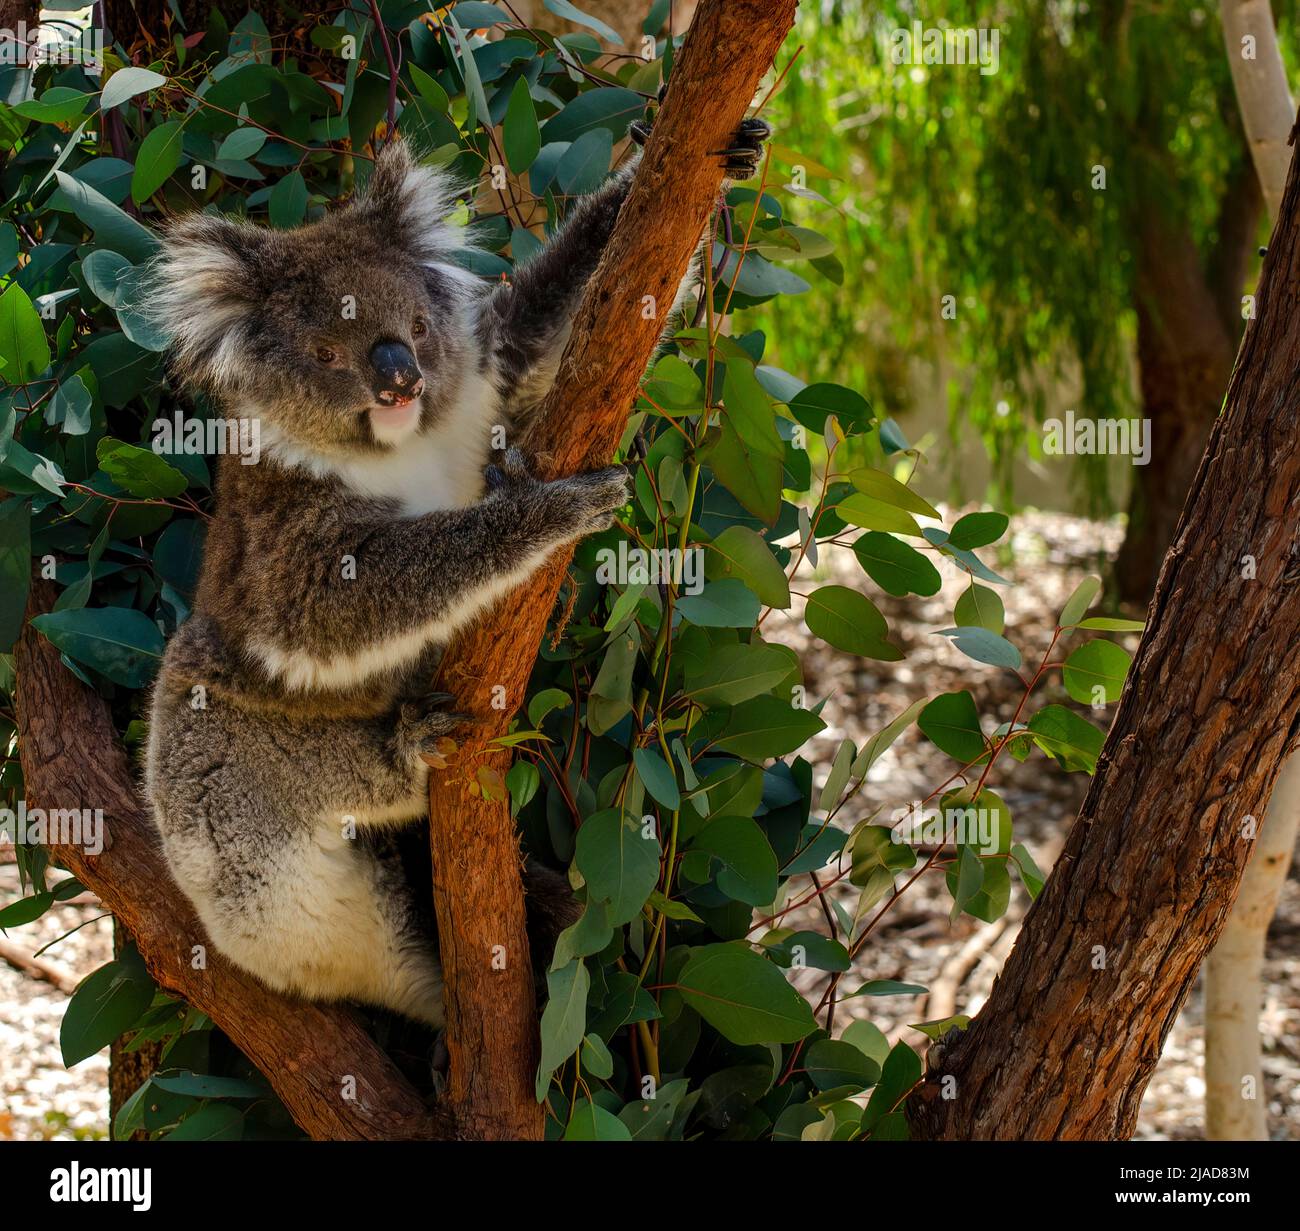 Close-up Portrait of a koala in a eucalyptus tree, Western Australia, Australia Stock Photo